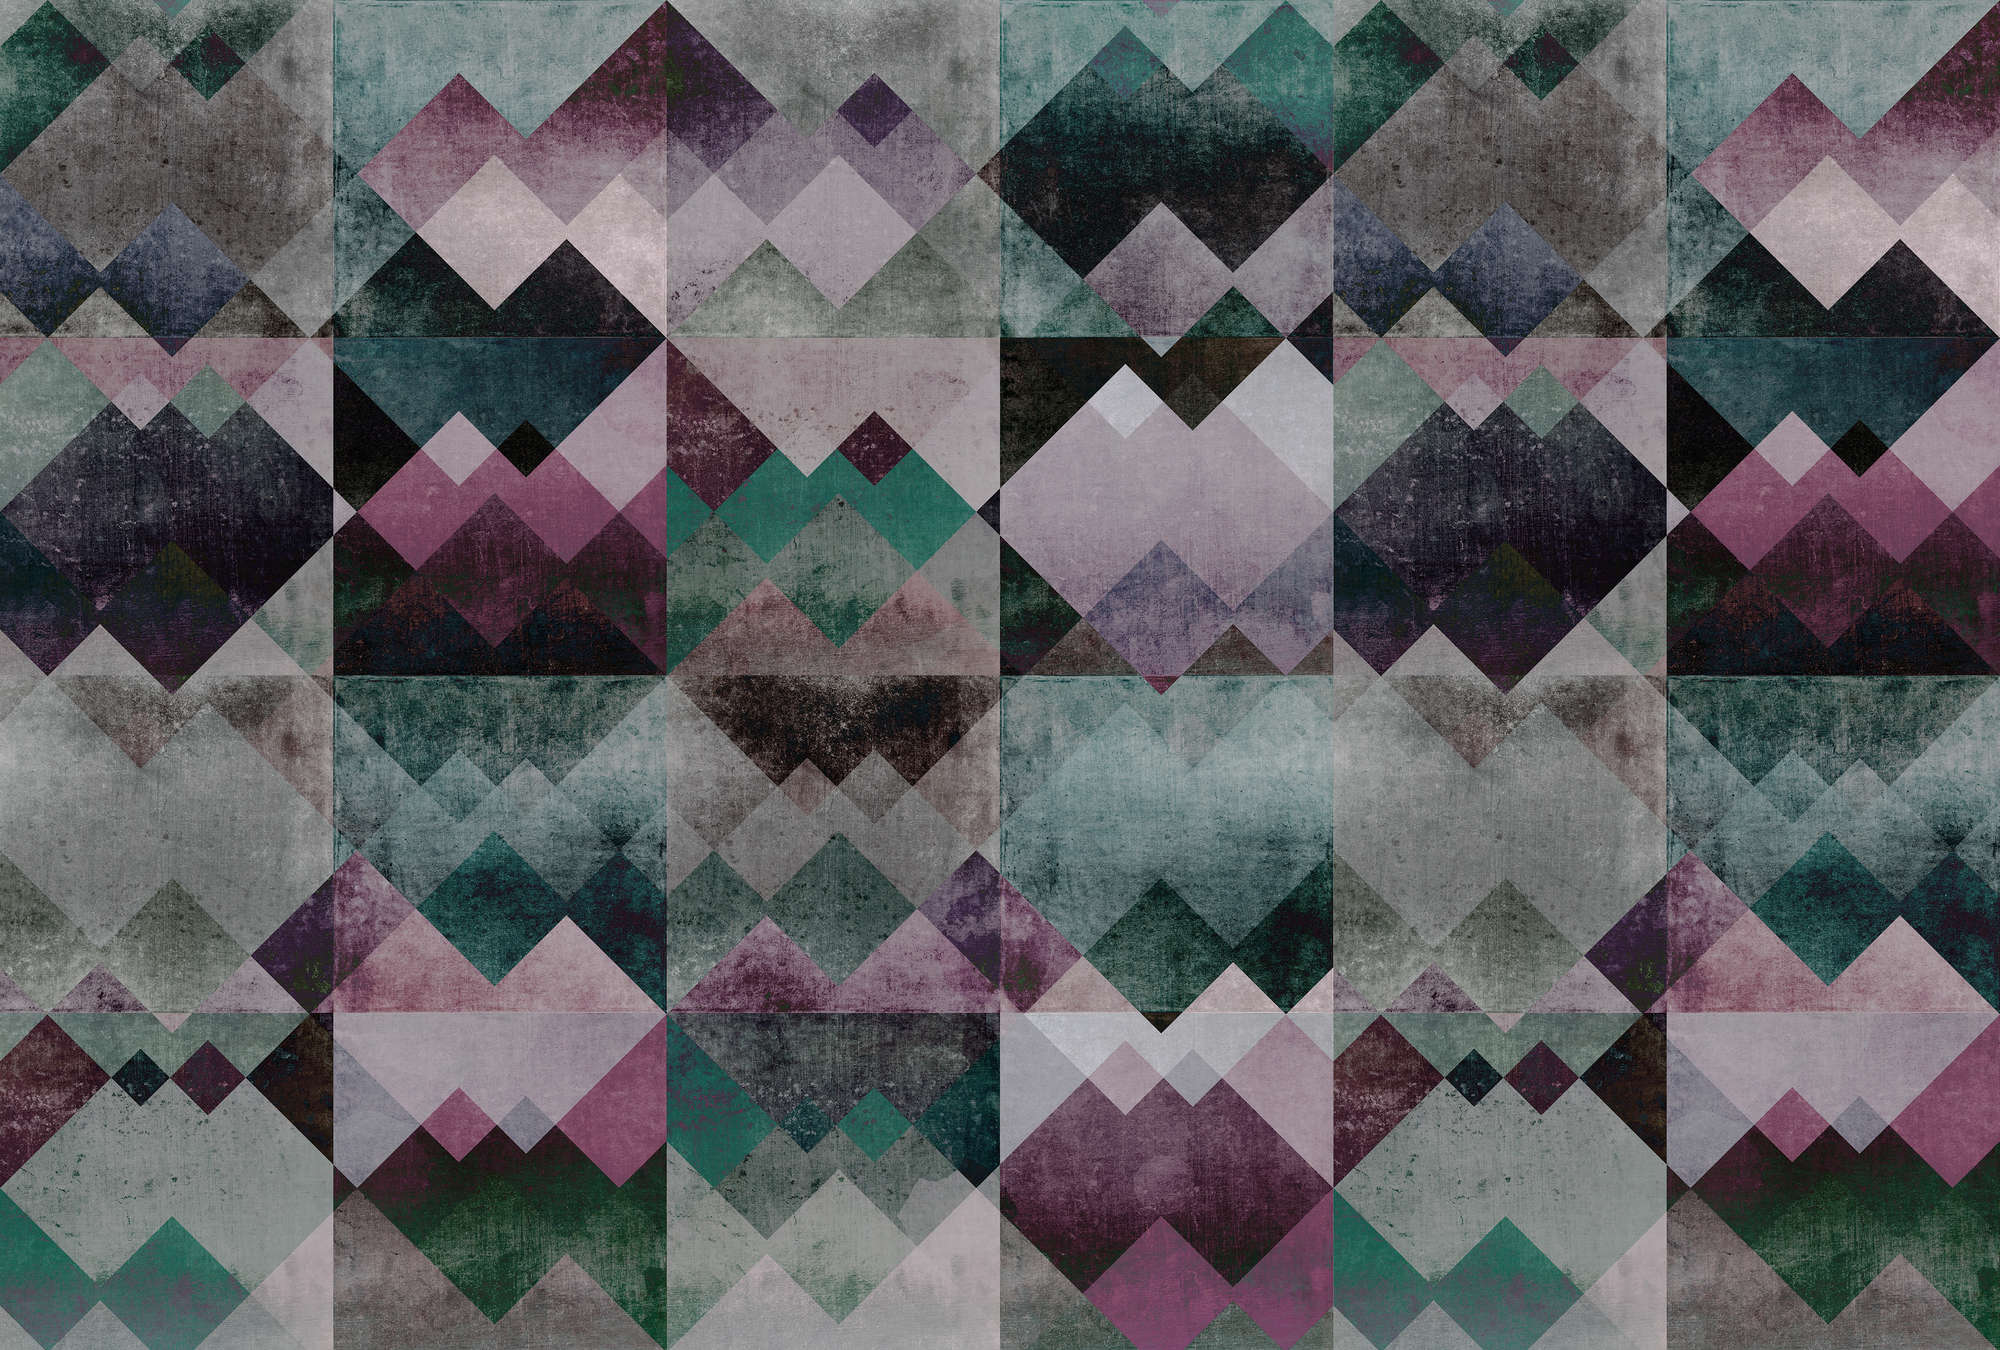             Photo wallpaper Geometric pattern mountains - purple, green
        